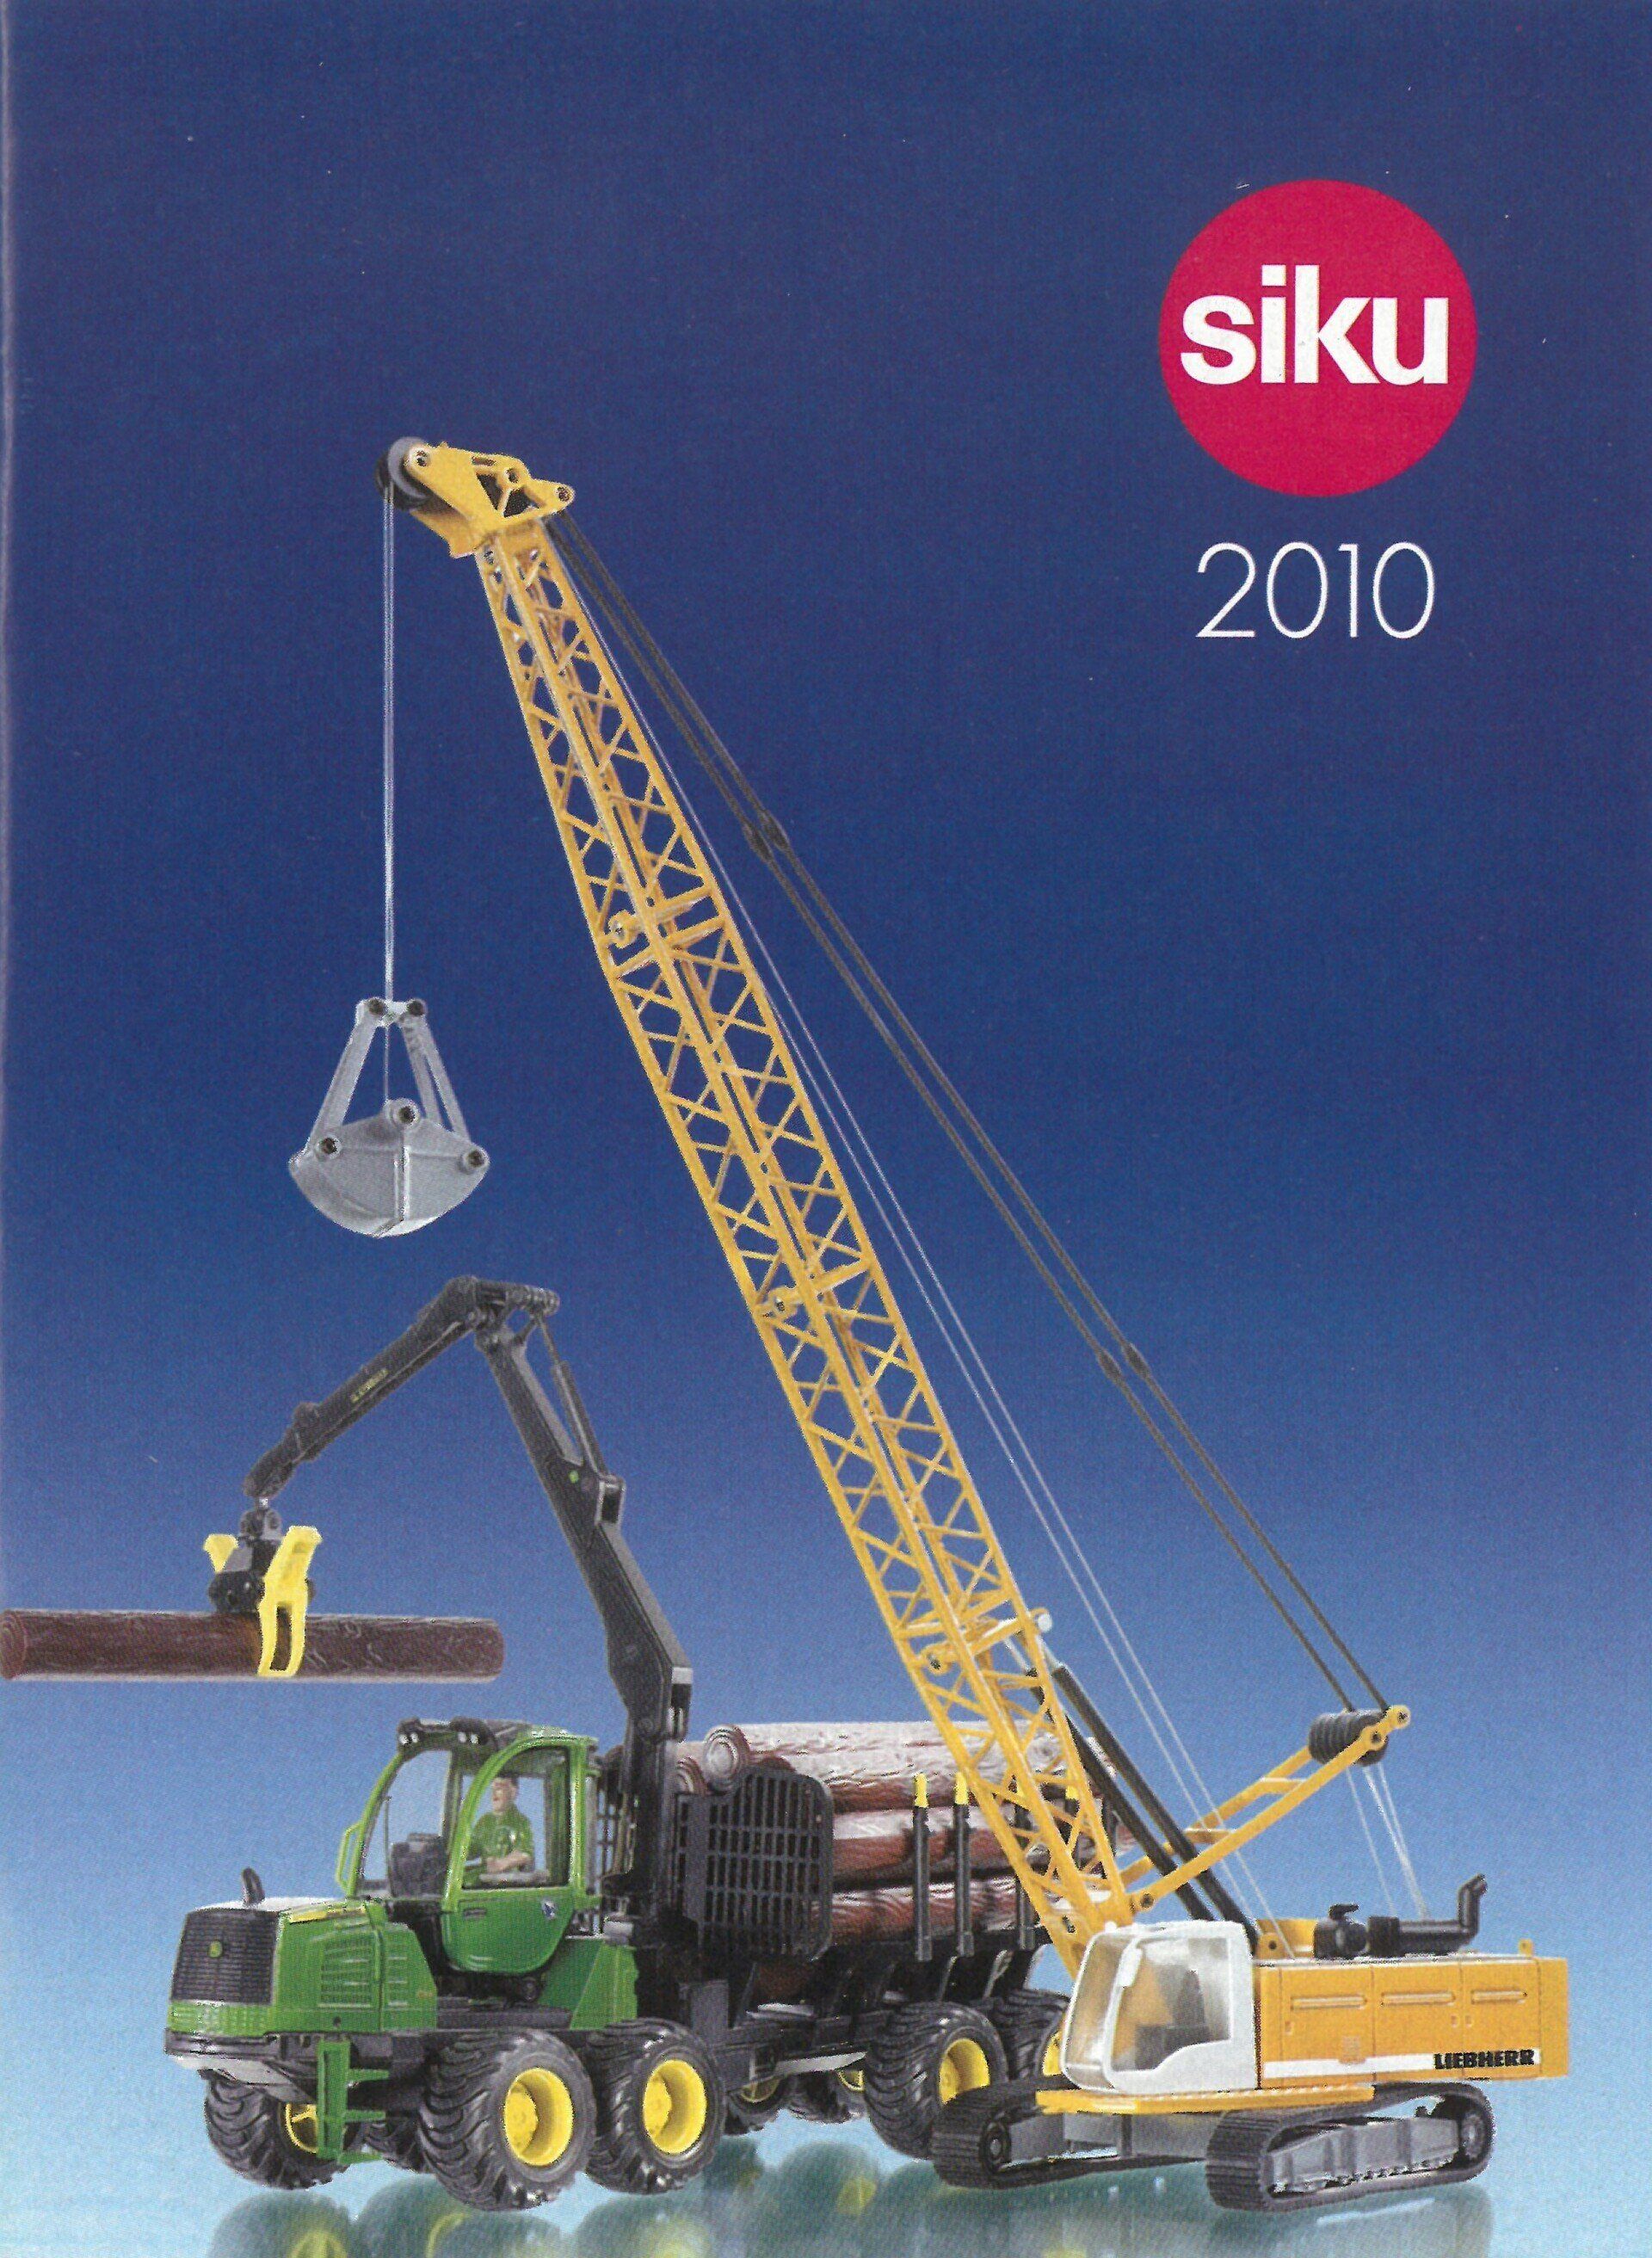 Siku Katalog 2010